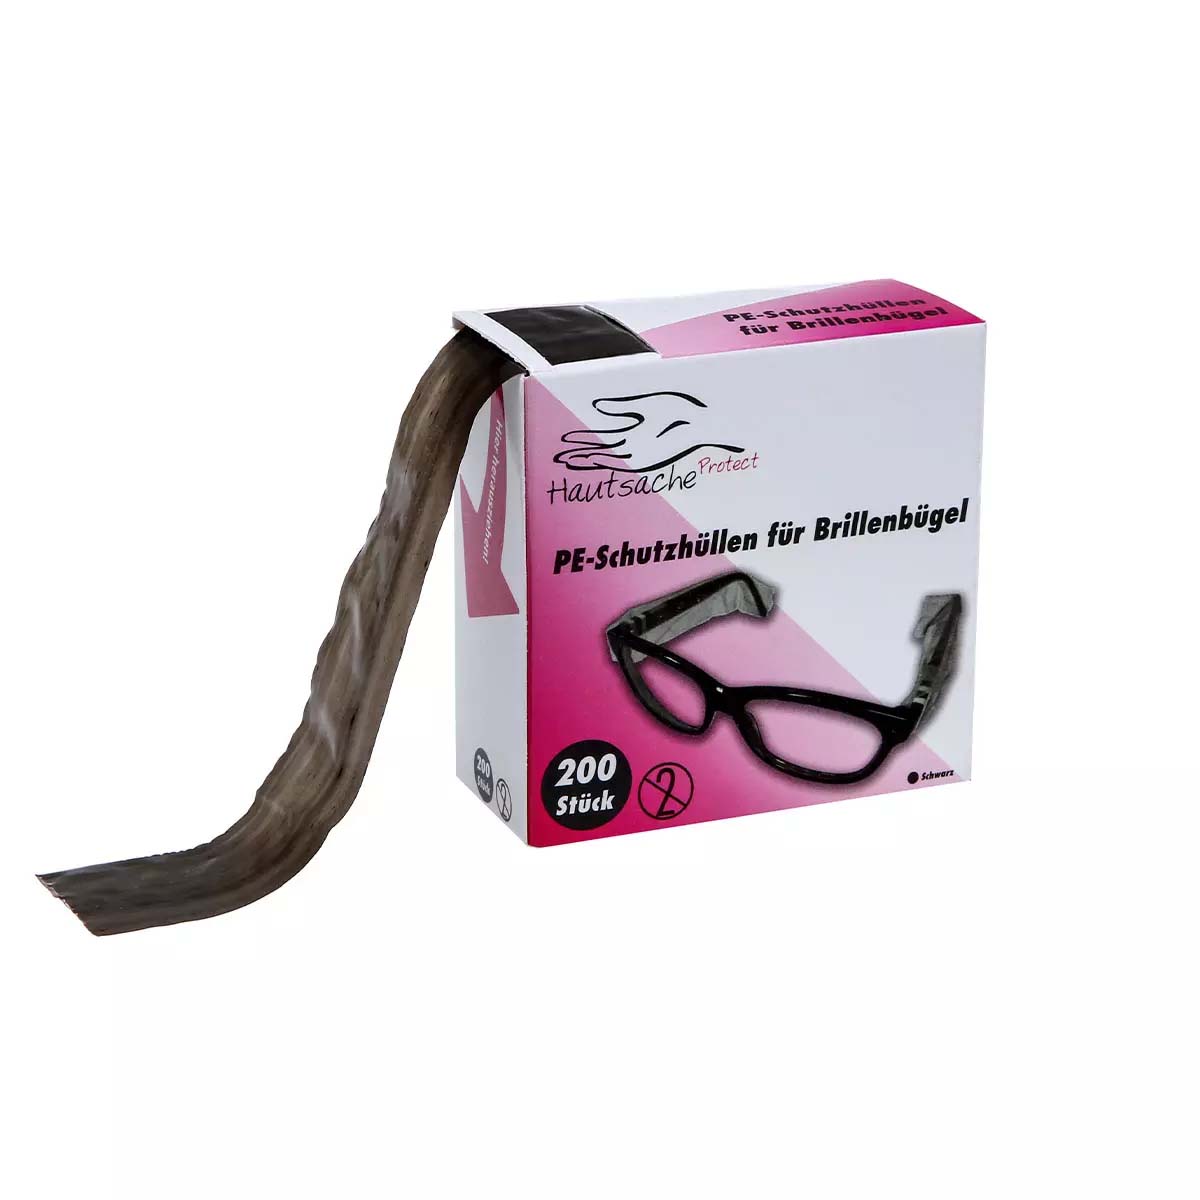 Schutzhüllen Brillenbügel PE, schwarz